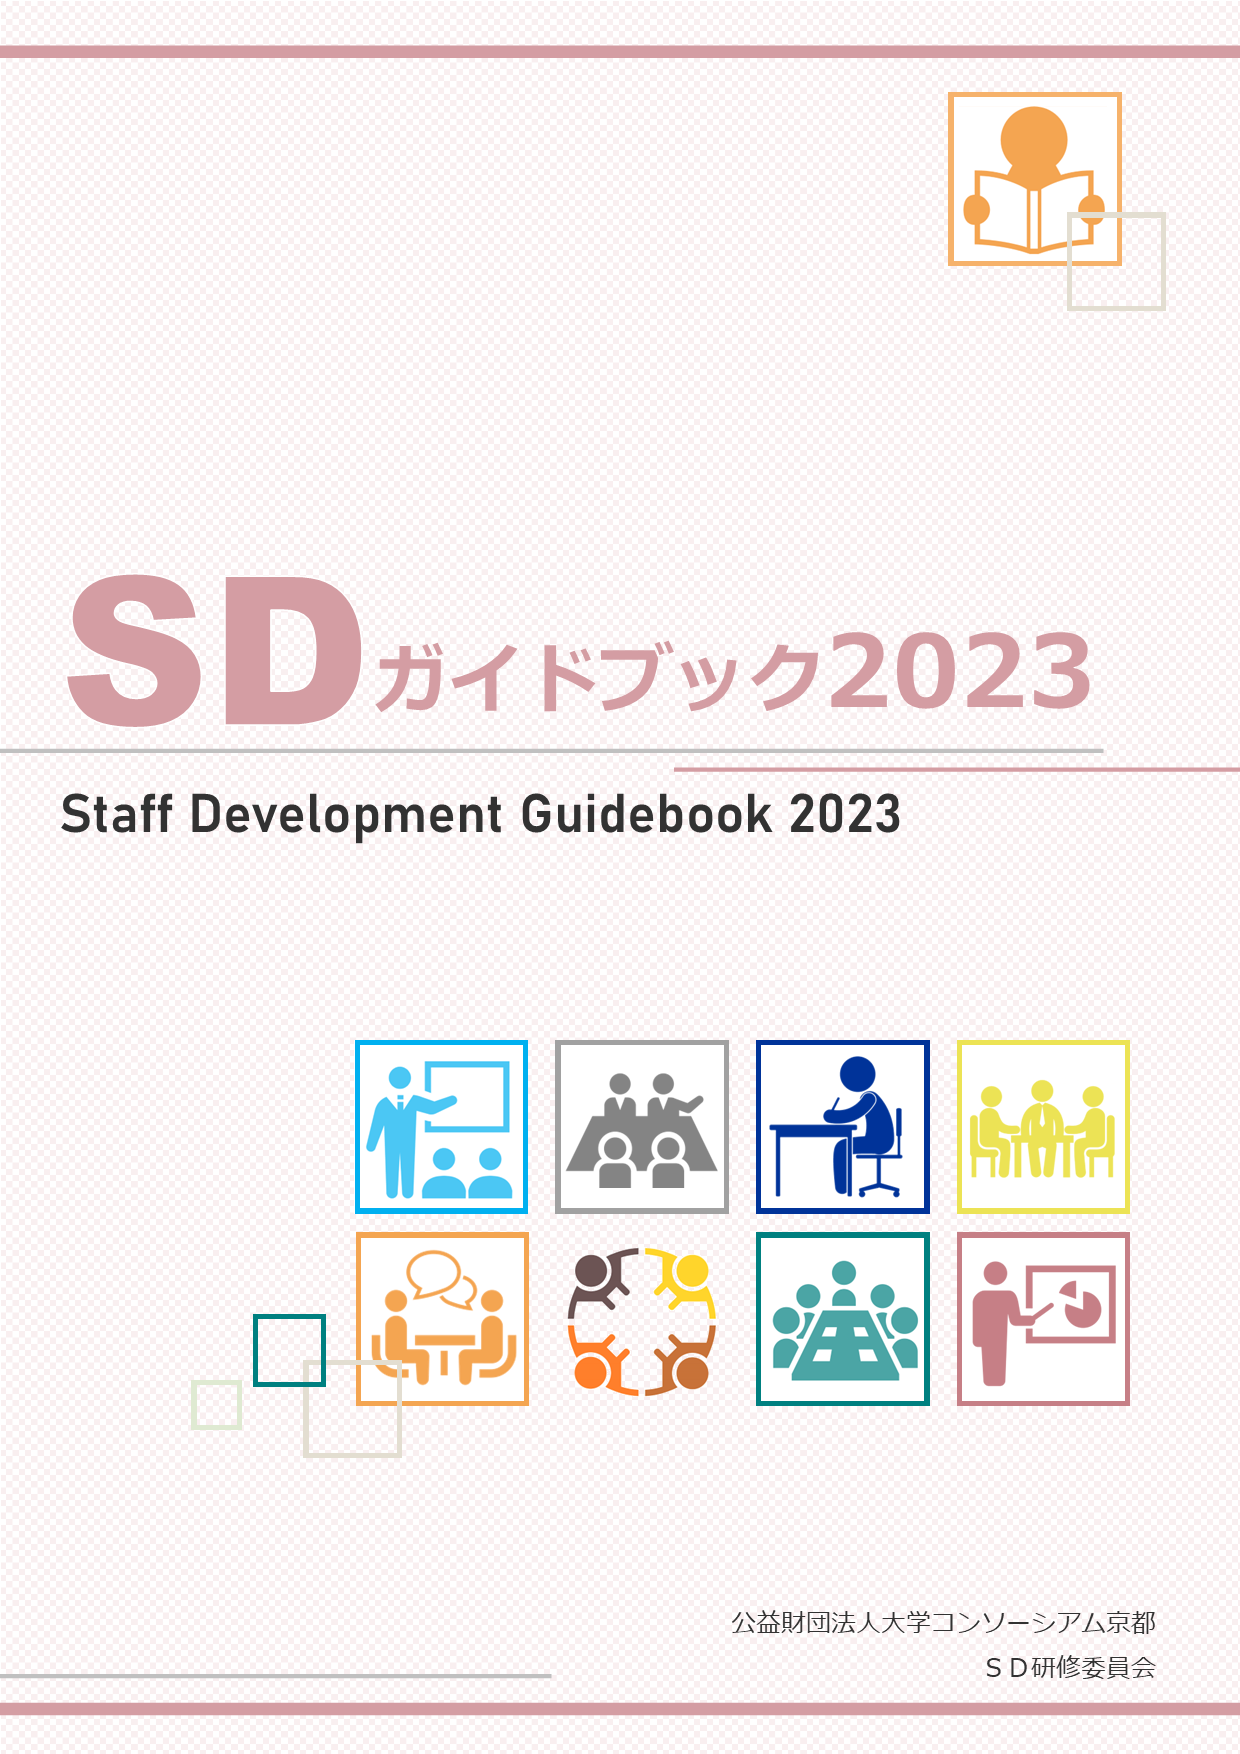 SD Guidebook